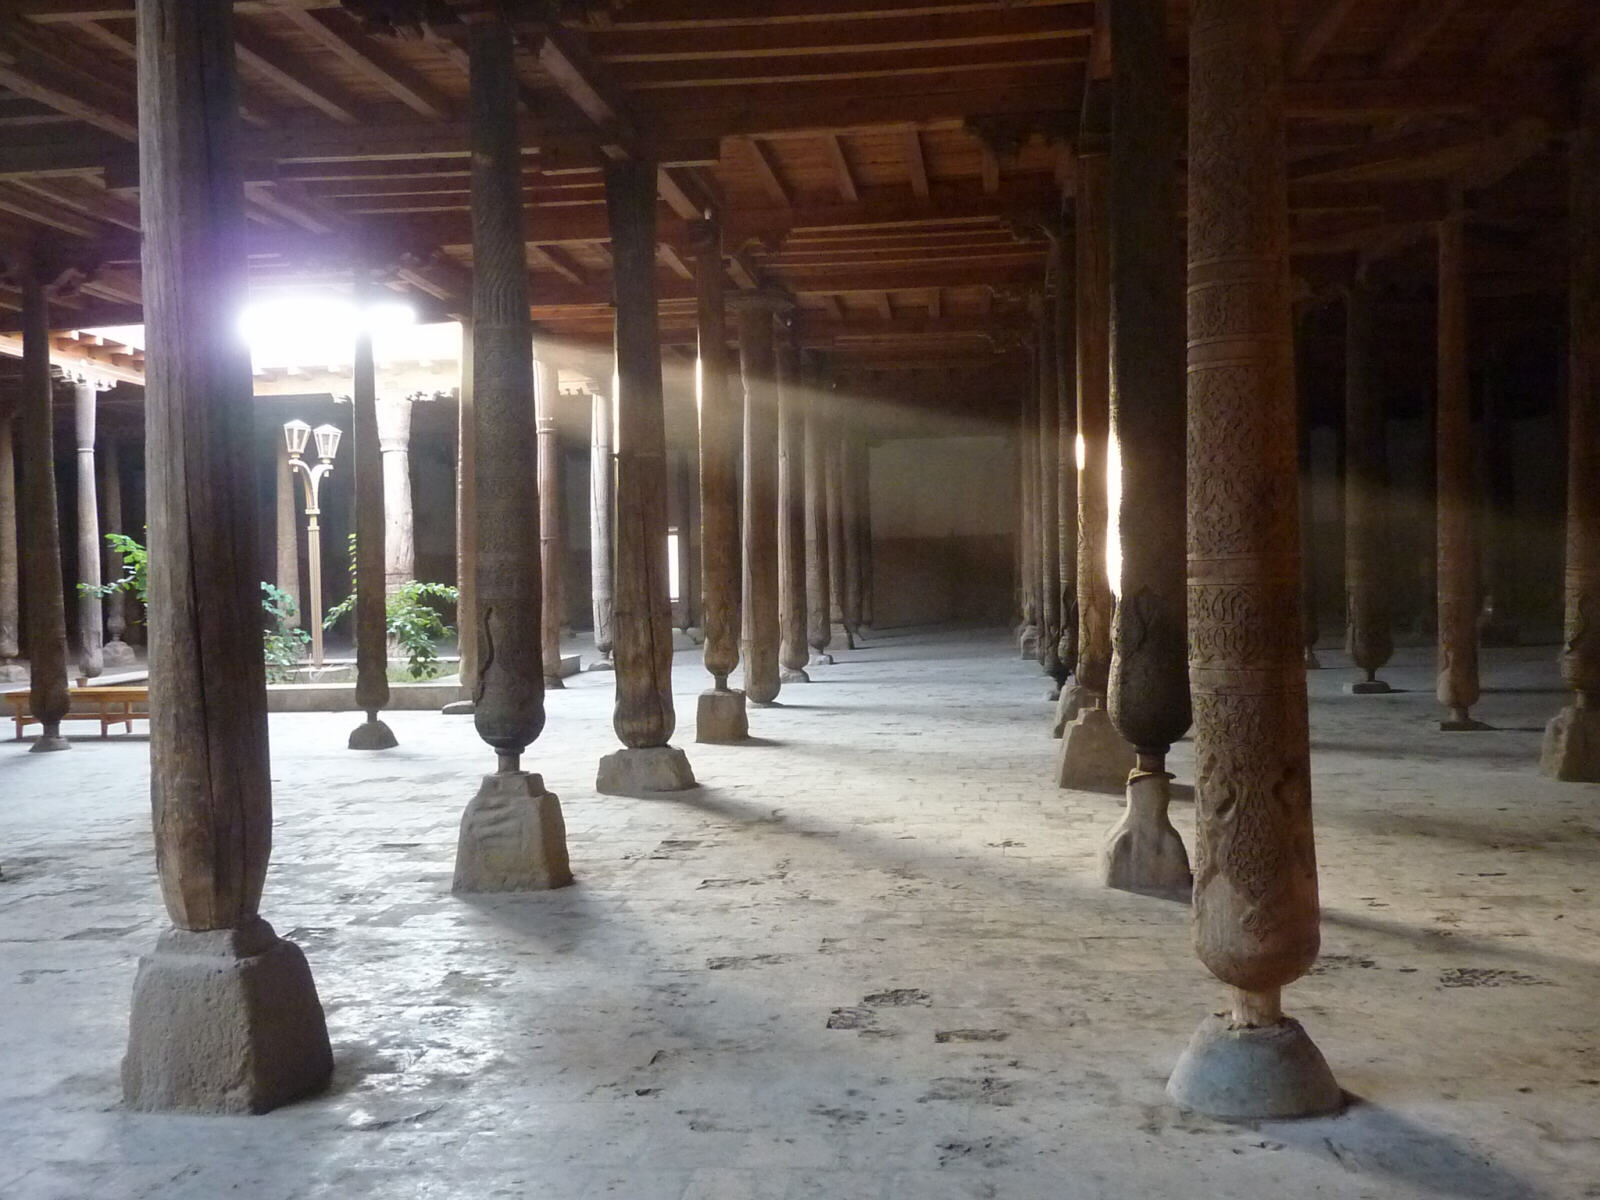 Ancient wooden pillars in the Juma Mosque in Khiva, Uzbekistan